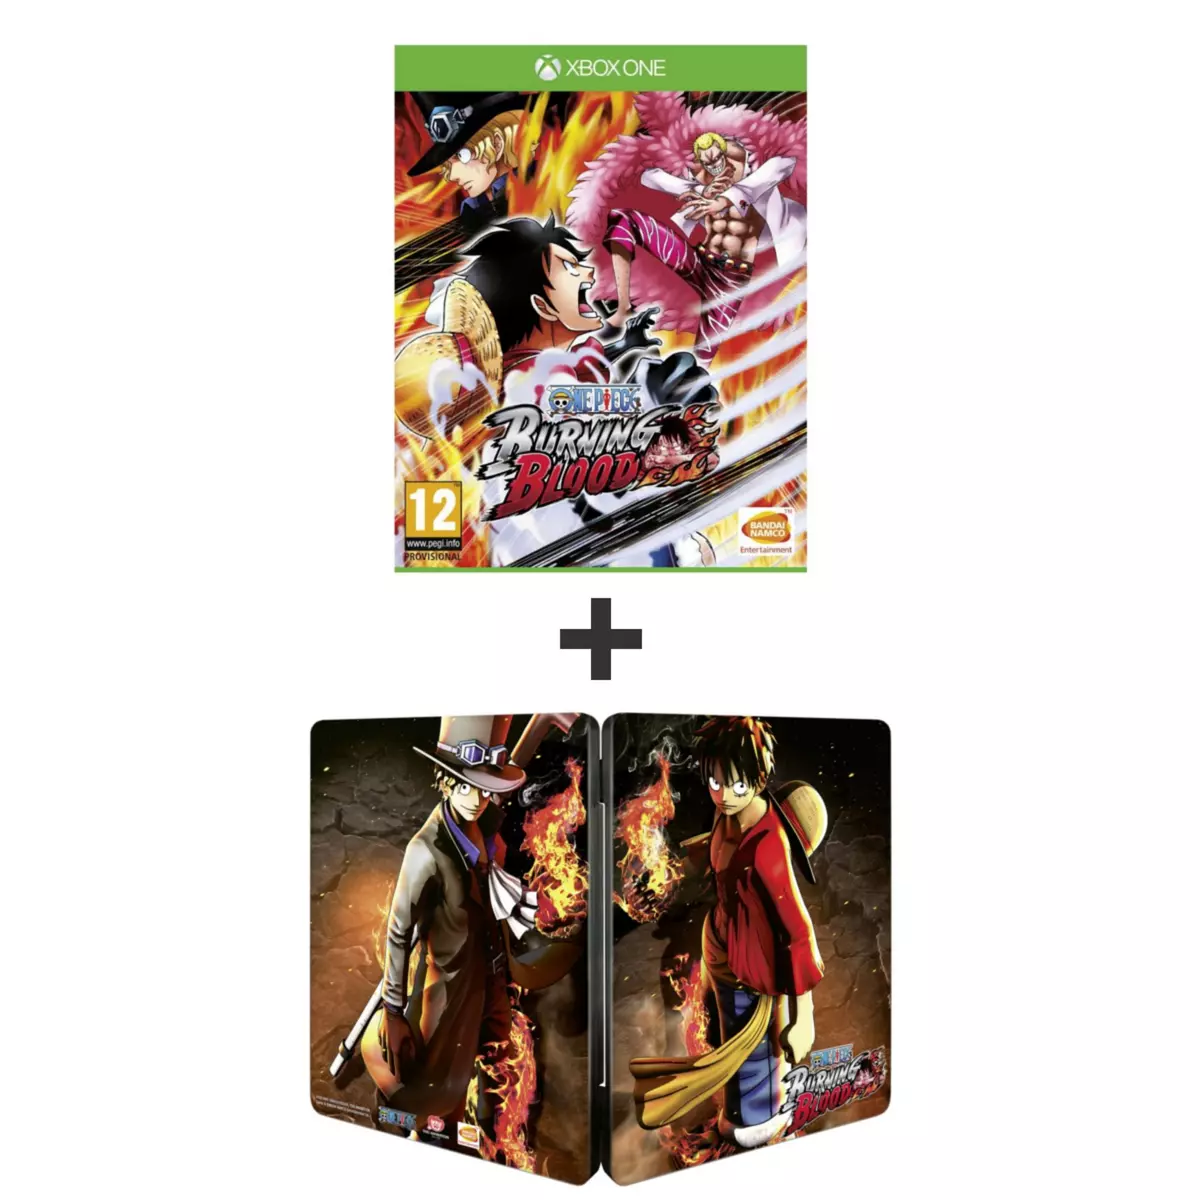 One Piece Burning Blood Xbox one + Metal case Offert